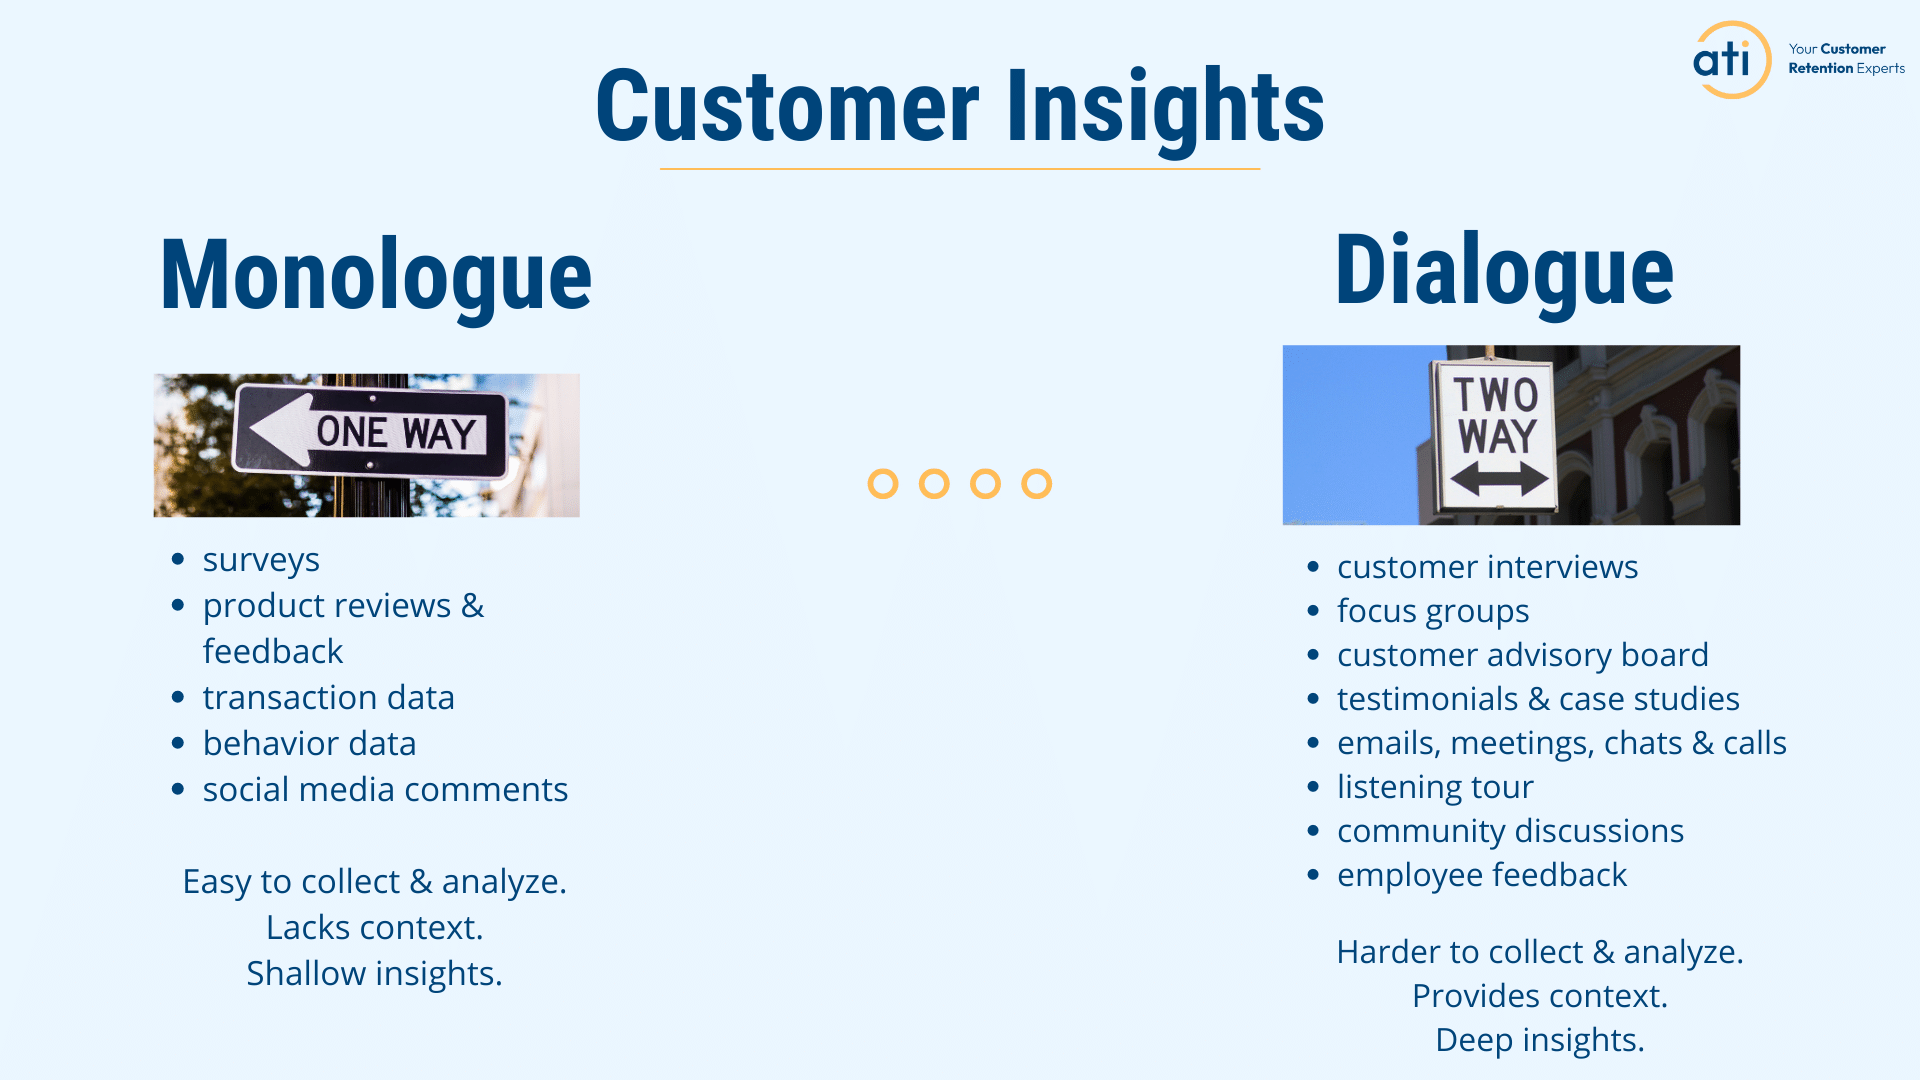 monologue and dialogue customer insights activities